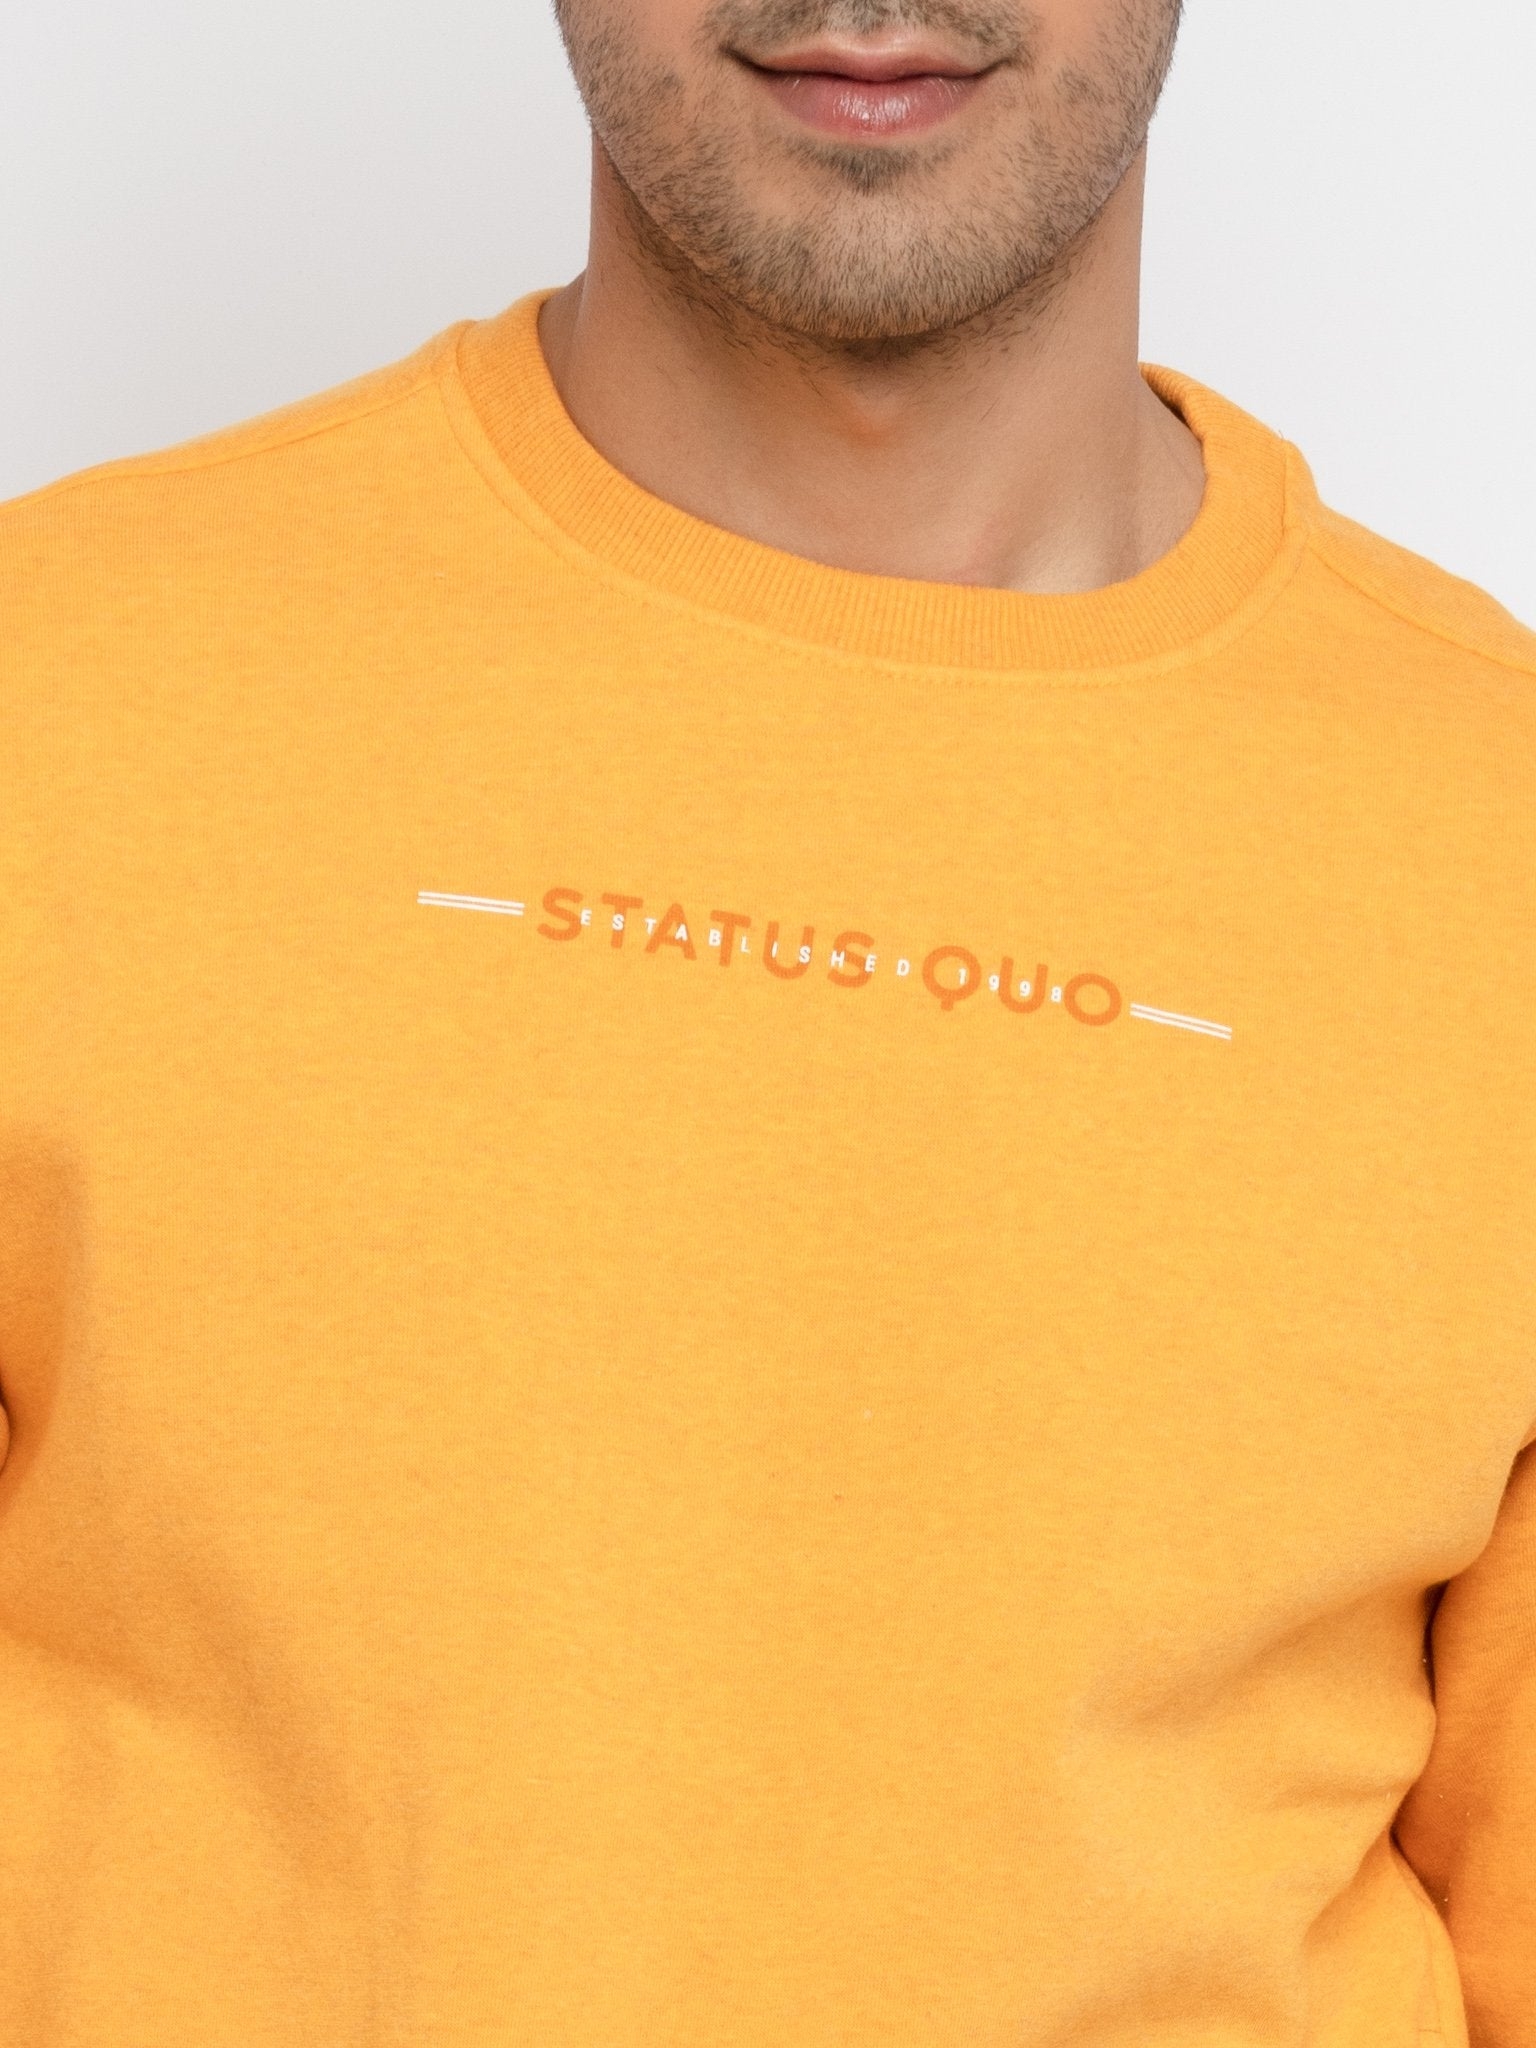 Status Quo | Men's Yellow Polycotton Printed Sweatshirts 6